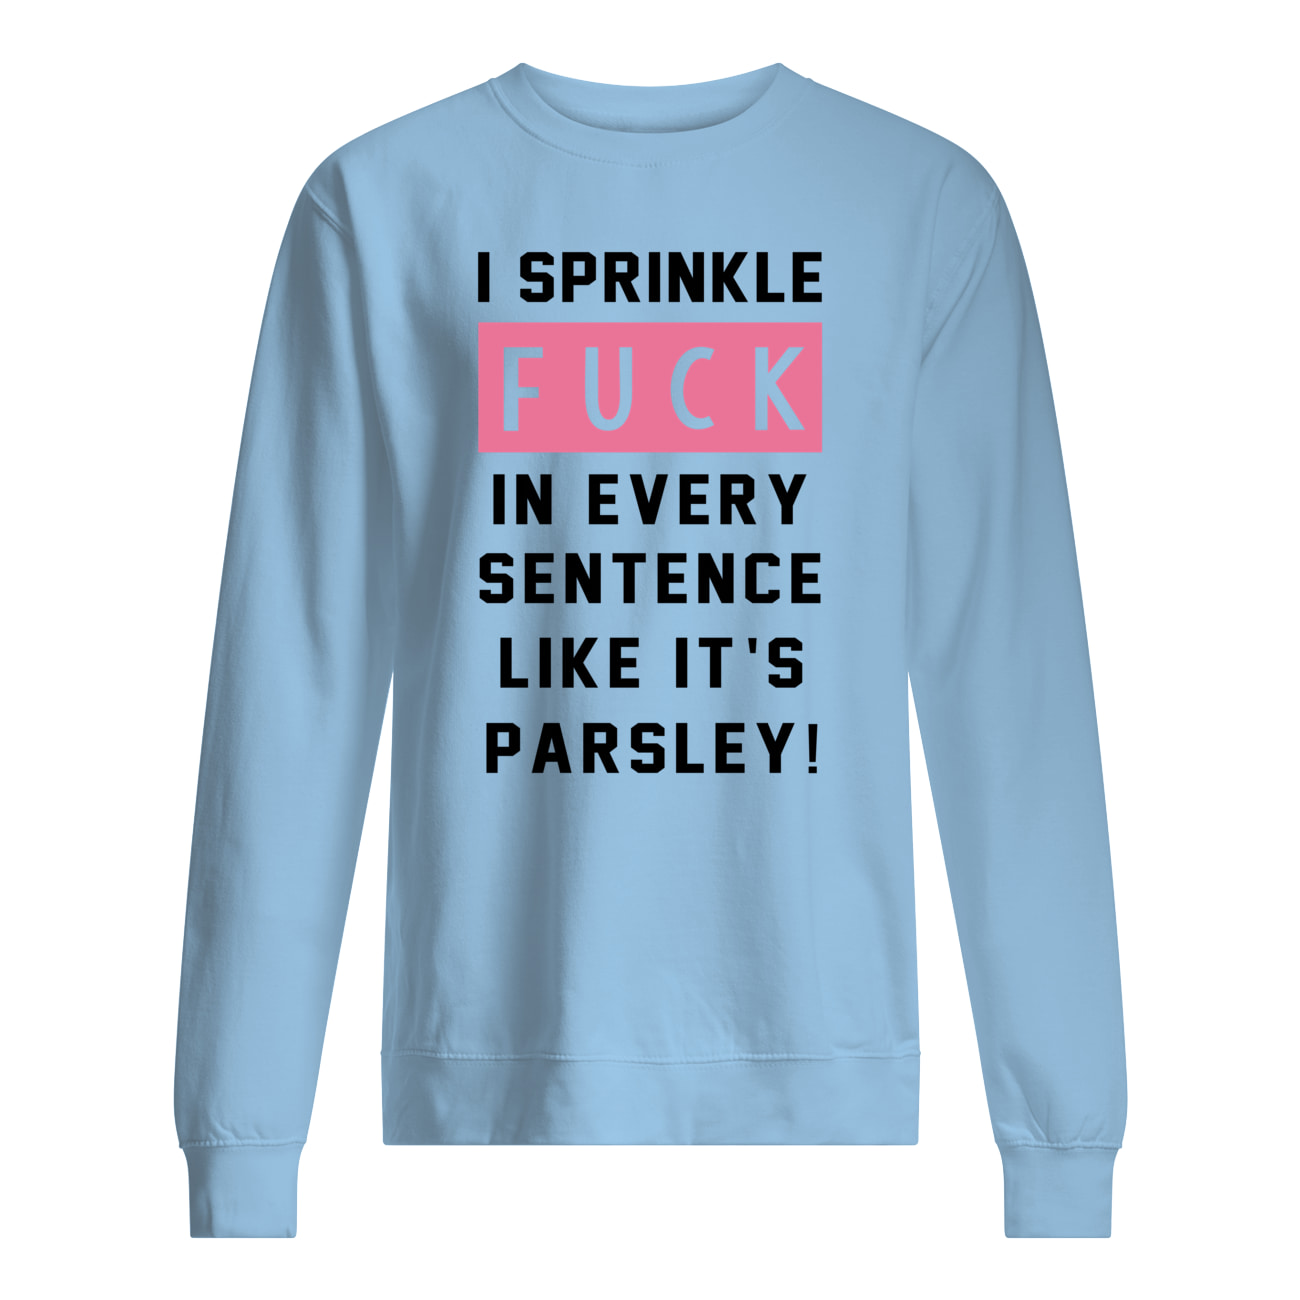 I sprinkle fuck in every sentence like it's parsley sweatshirt